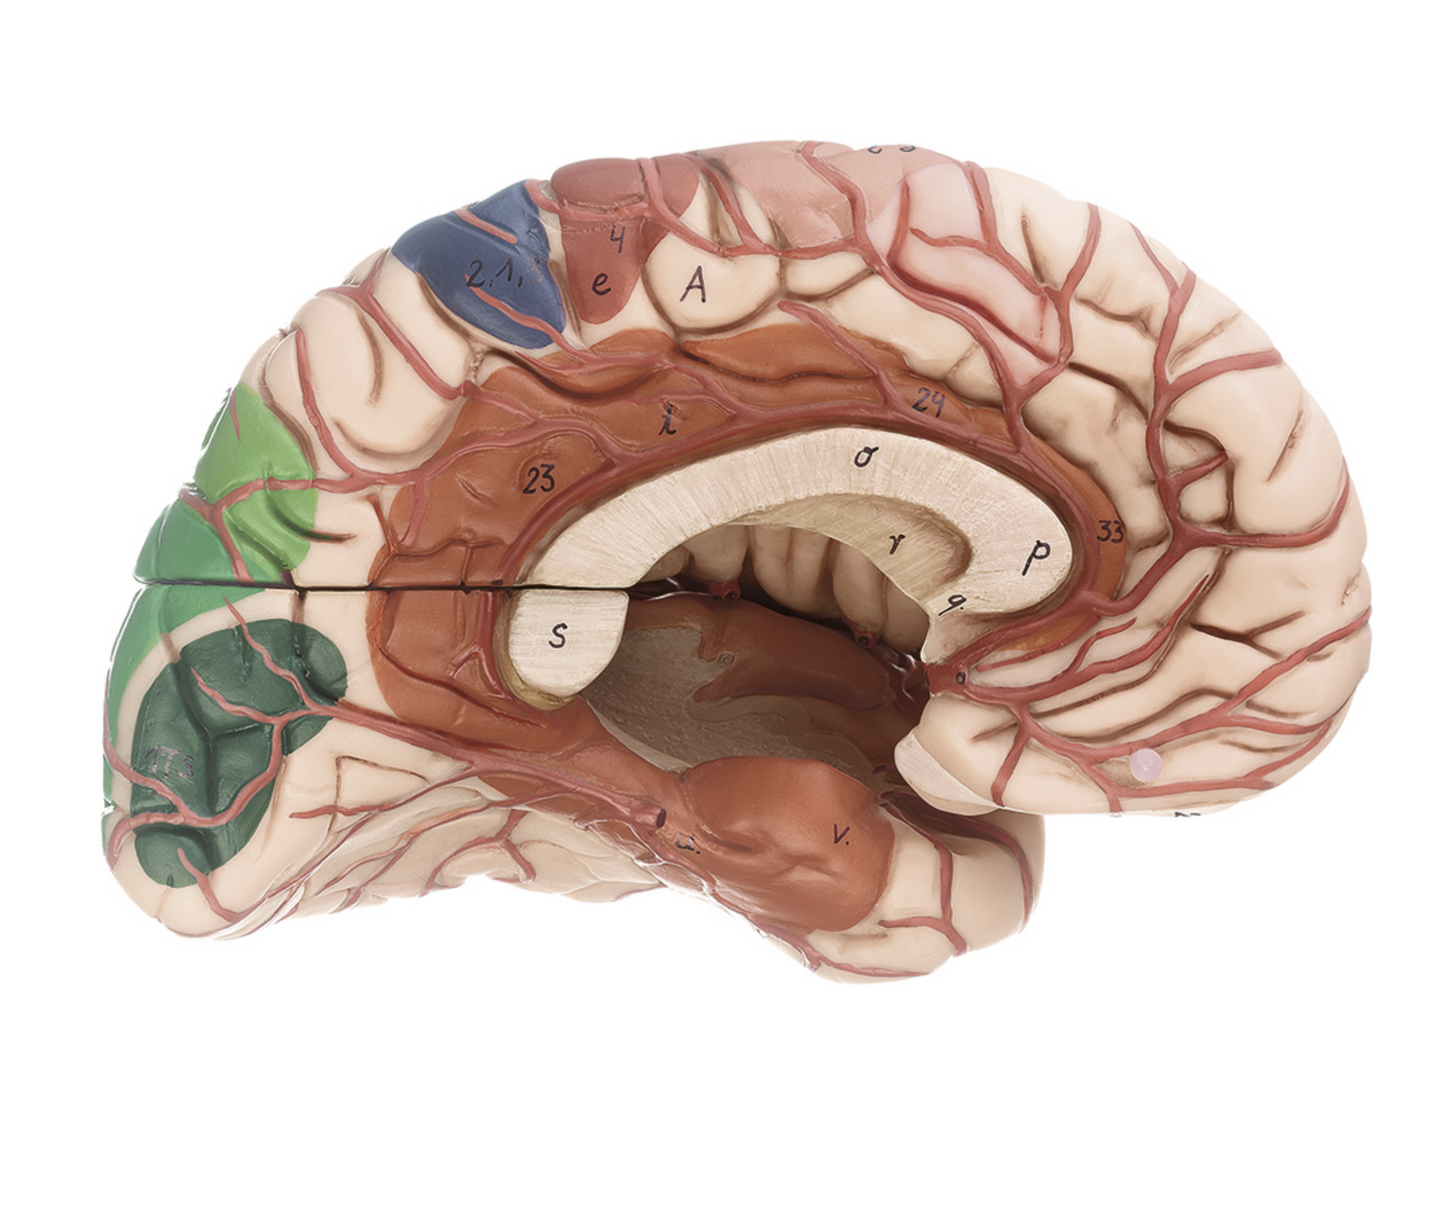 Advanced brain model with arteries, color markings, meninges etc.